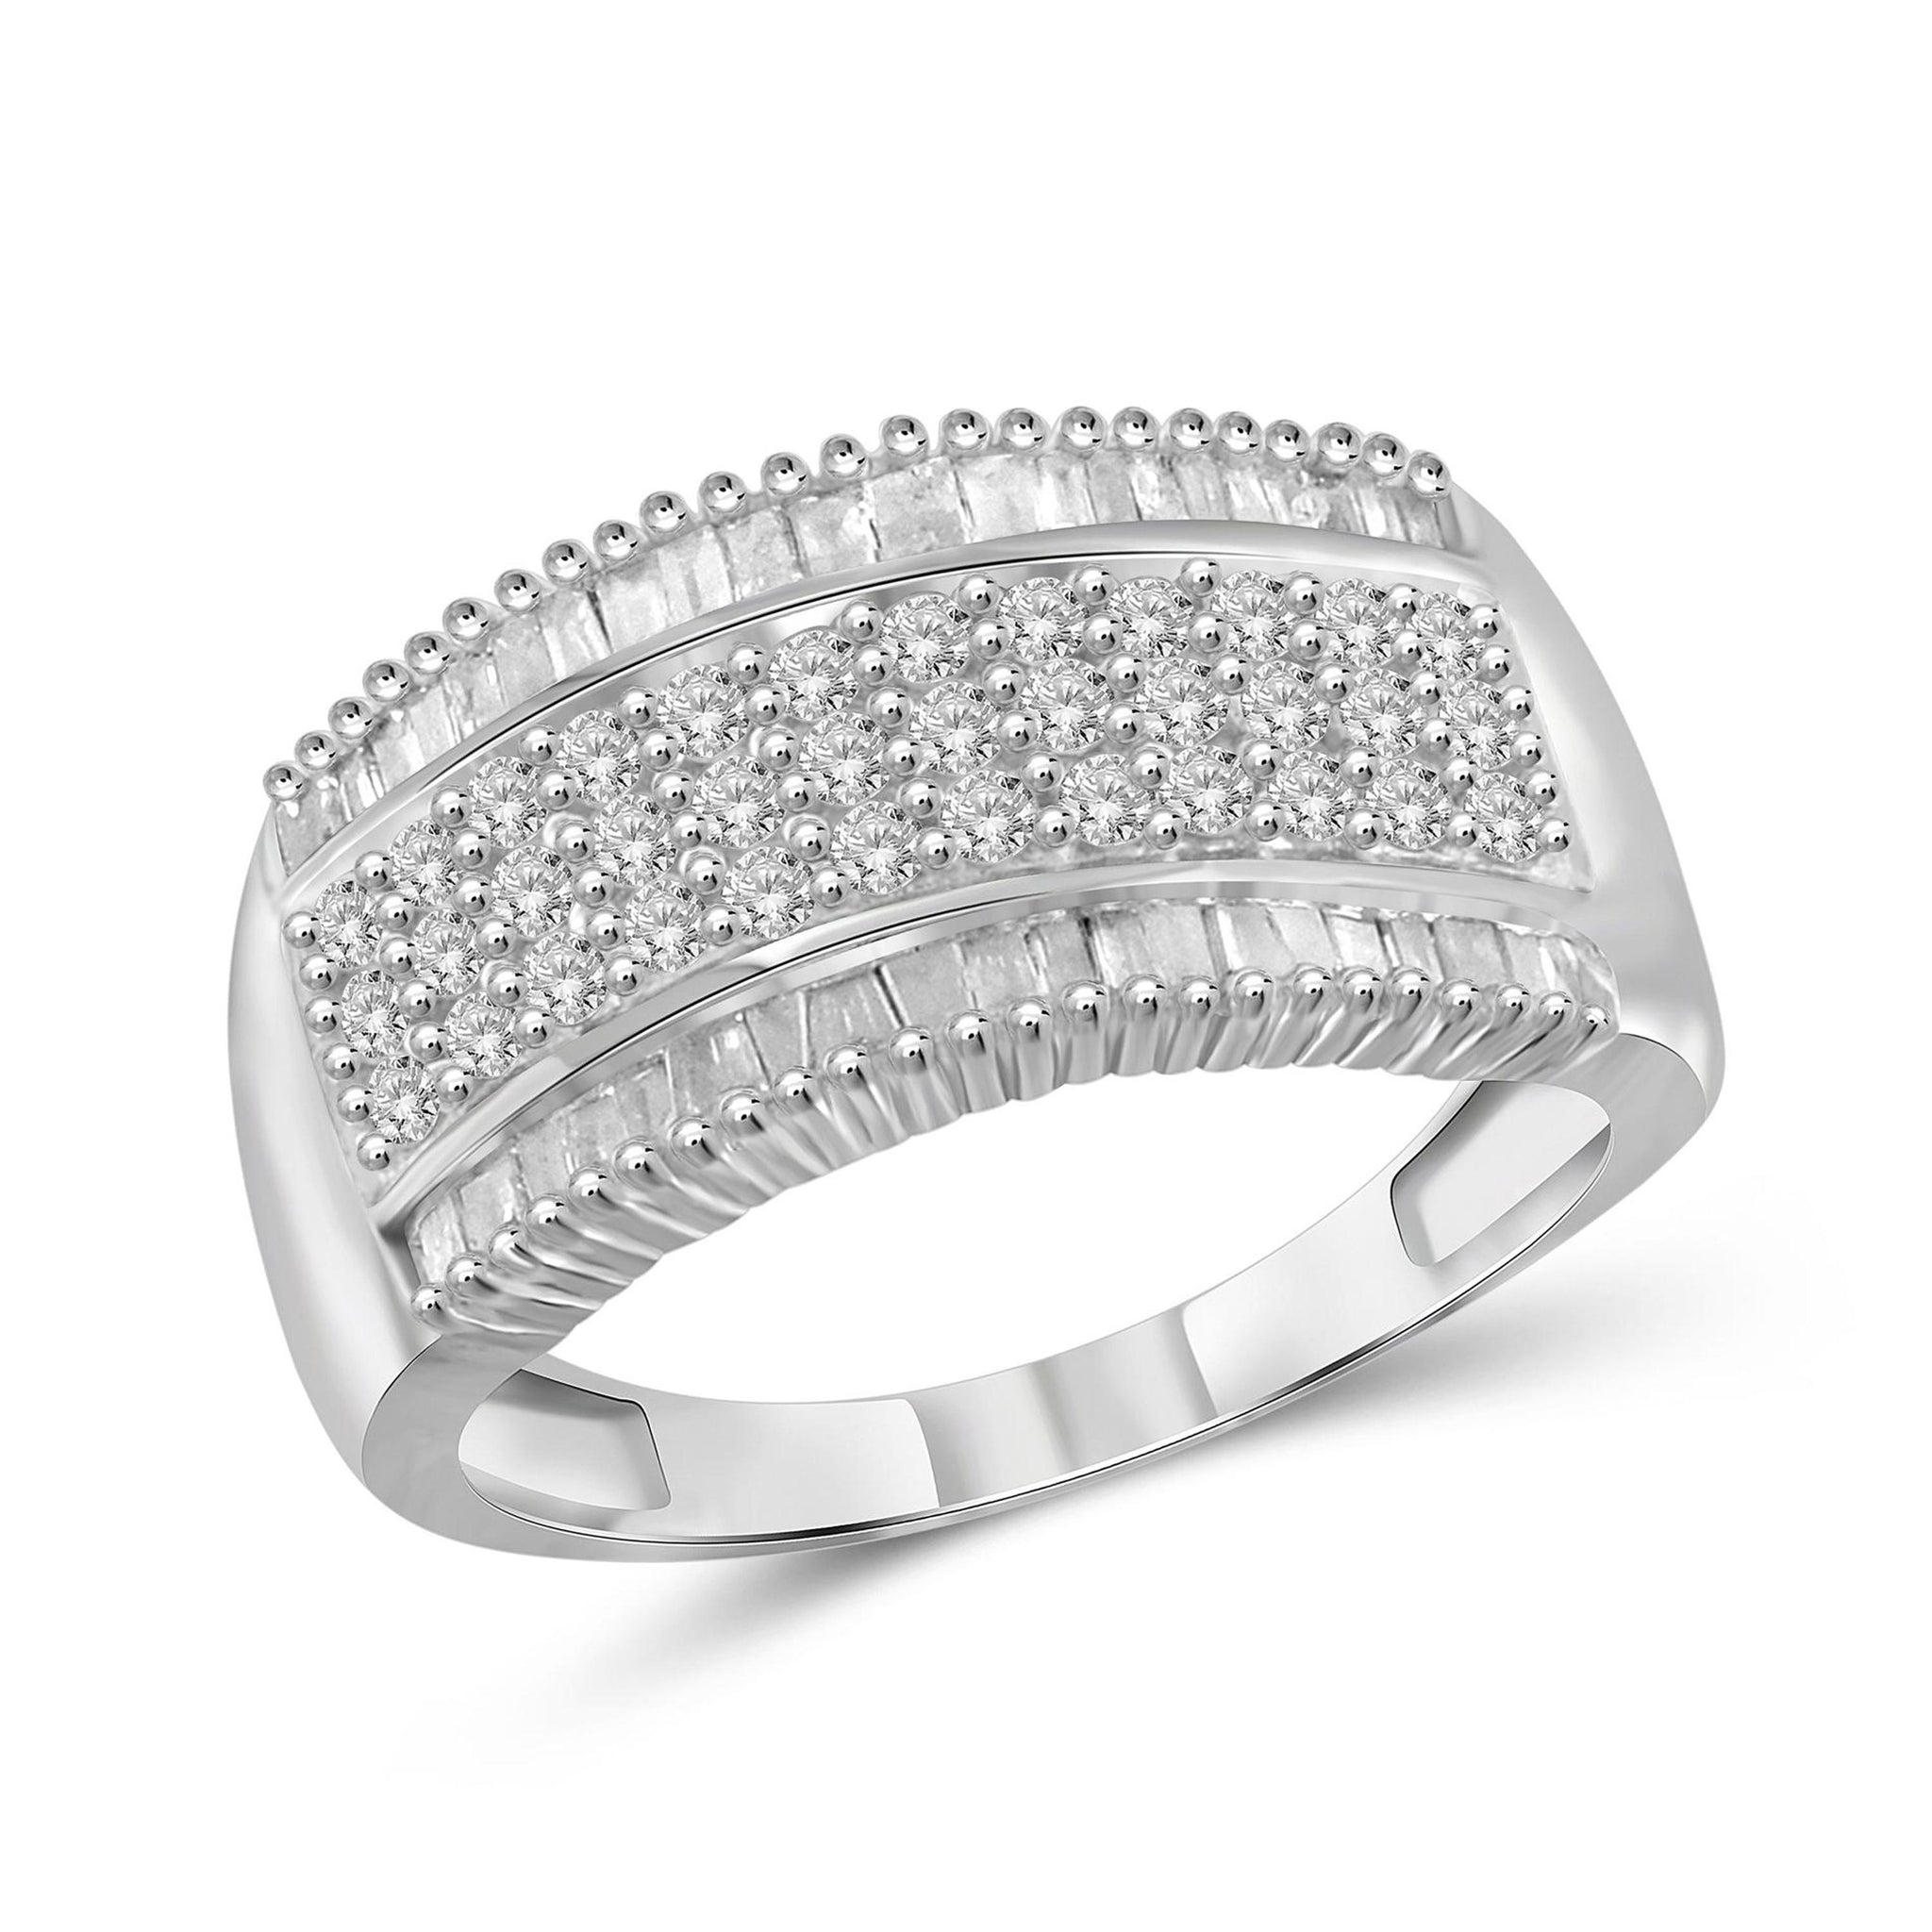 JewelonFire 1 Carat T.W. White Diamond Sterling Silver 5-Row Ring